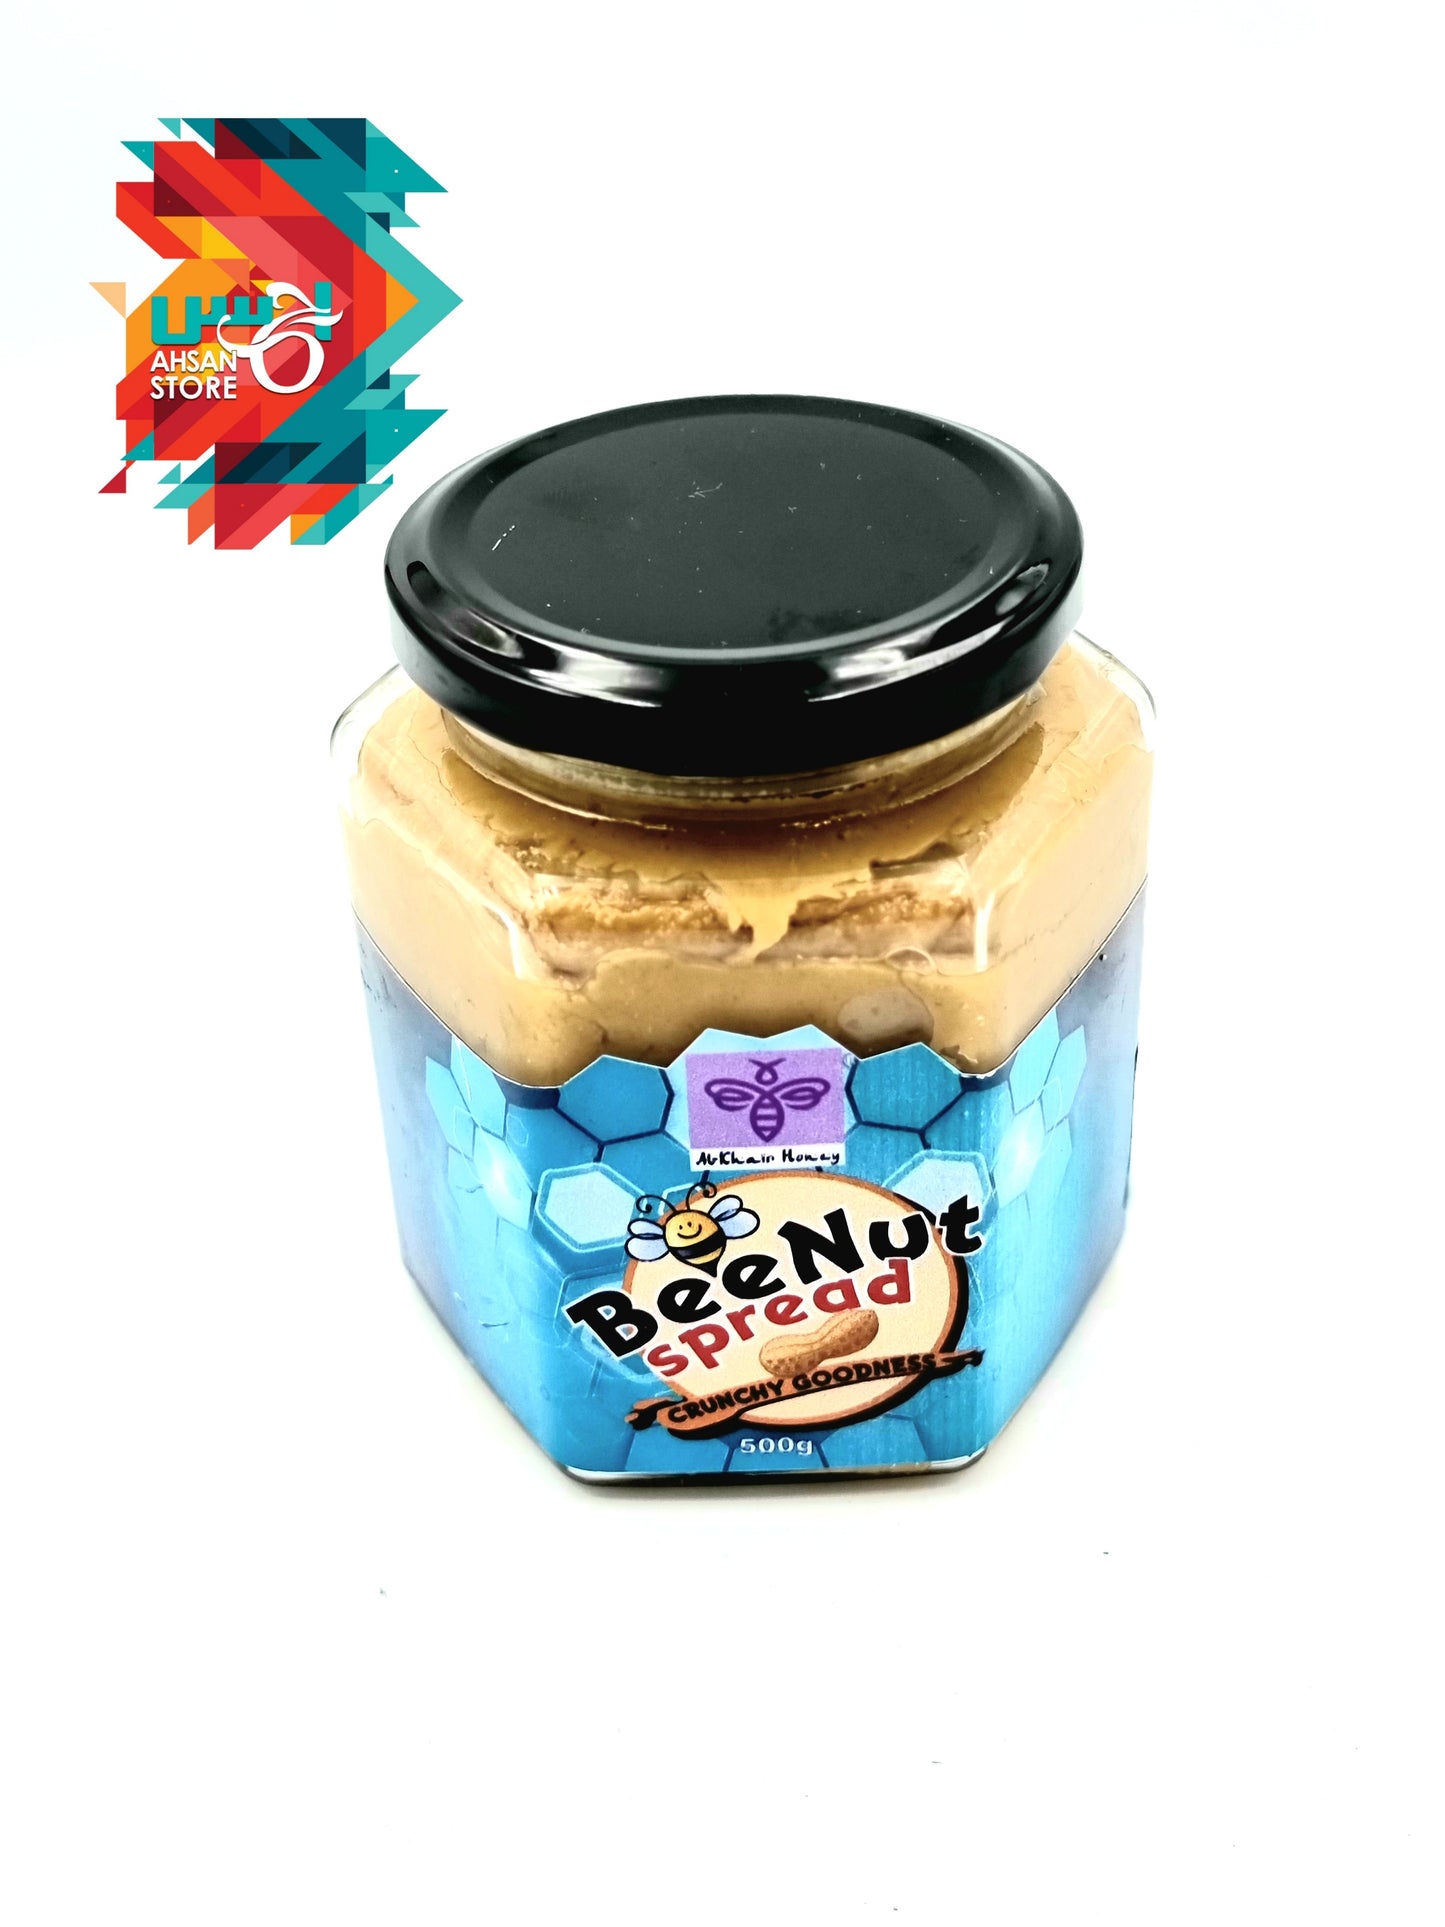 Al Khair Honey - Beenut Spread (500g Glass Jar)